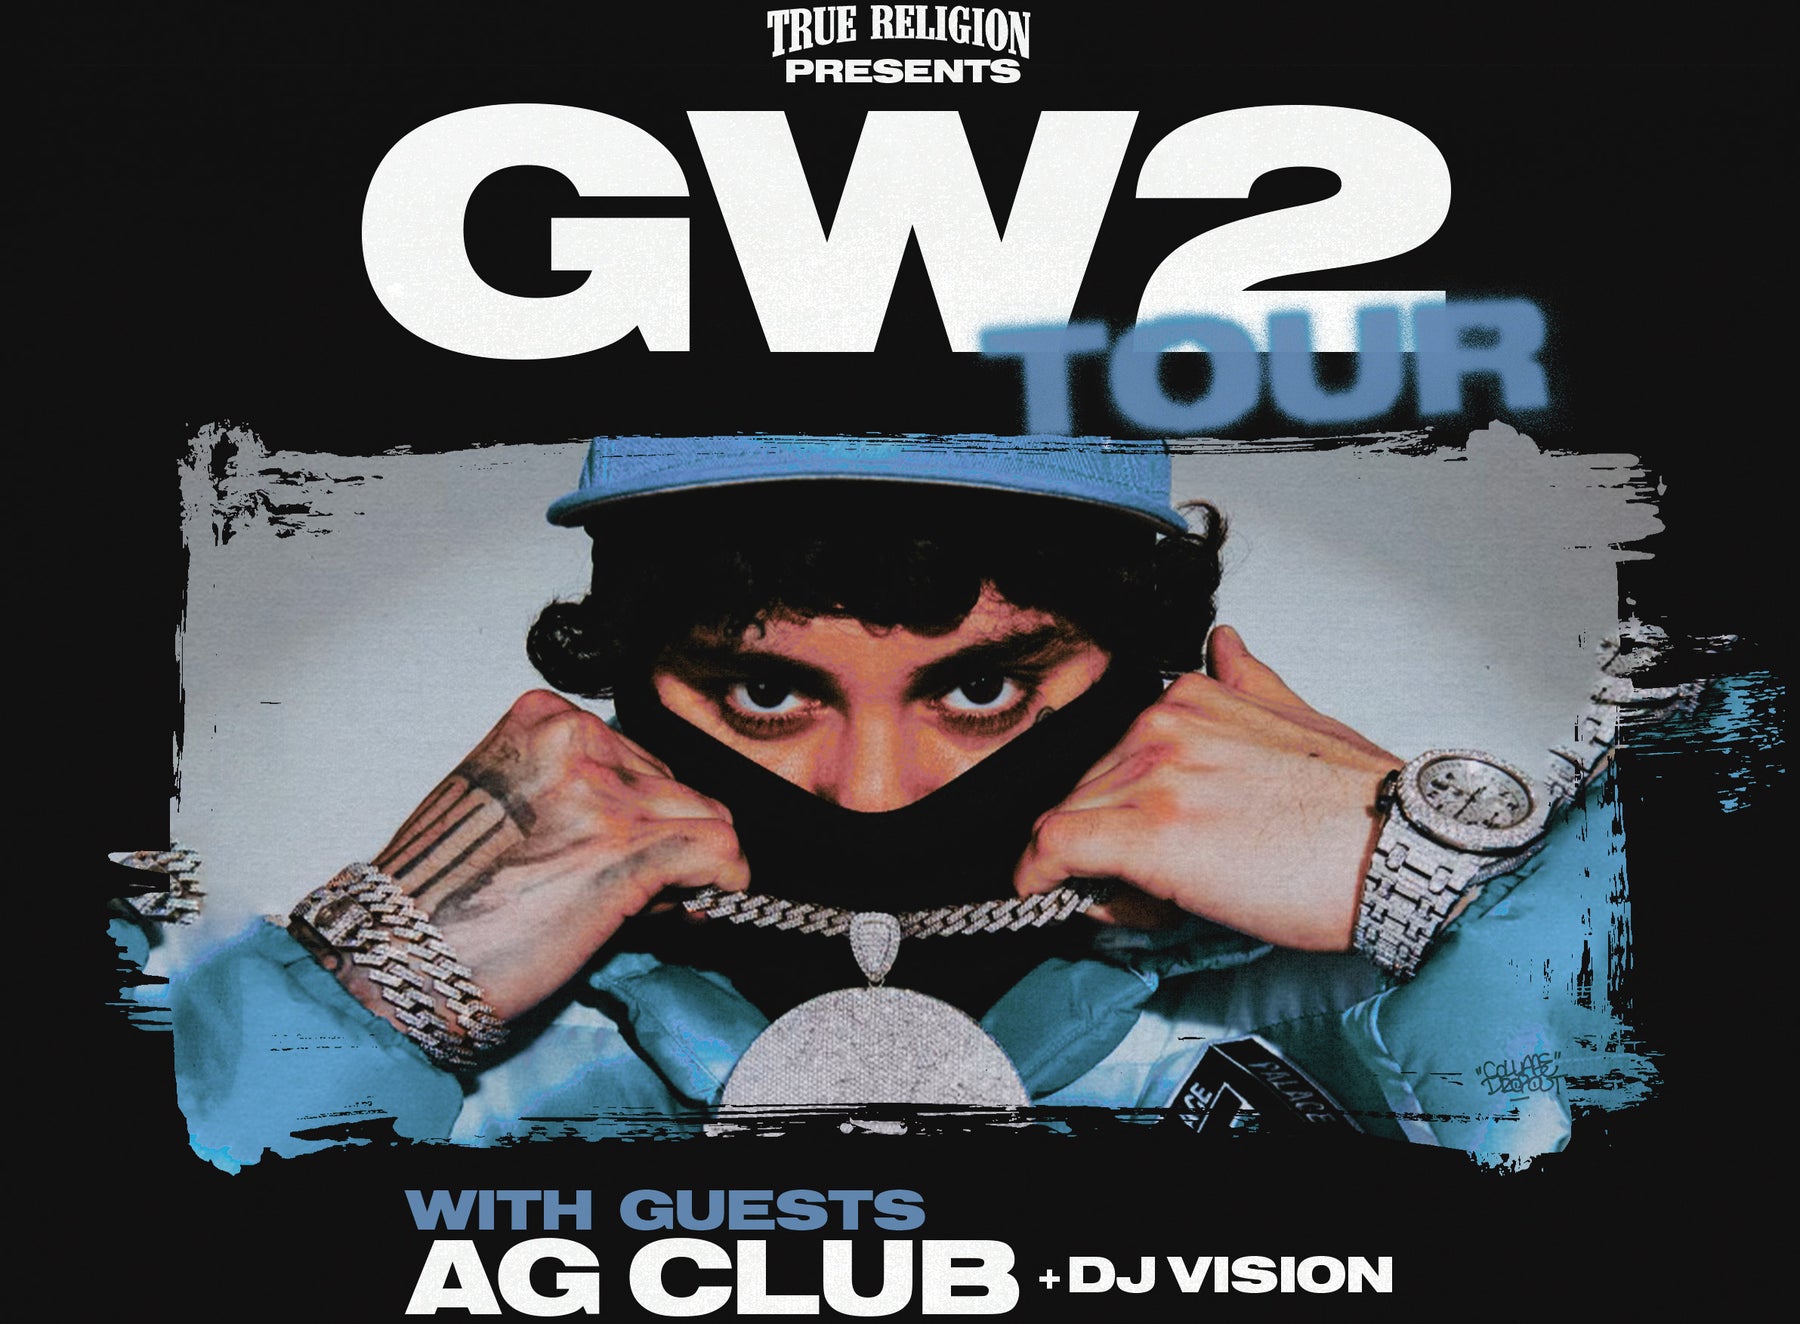 AG Club Shirts, AG Club Merch, AG Club Hoodies, AG Club Vinyl Records, AG  Club Posters, AG Club CDs, AG Club Hats, AG Club Music, AG Club Merch Store